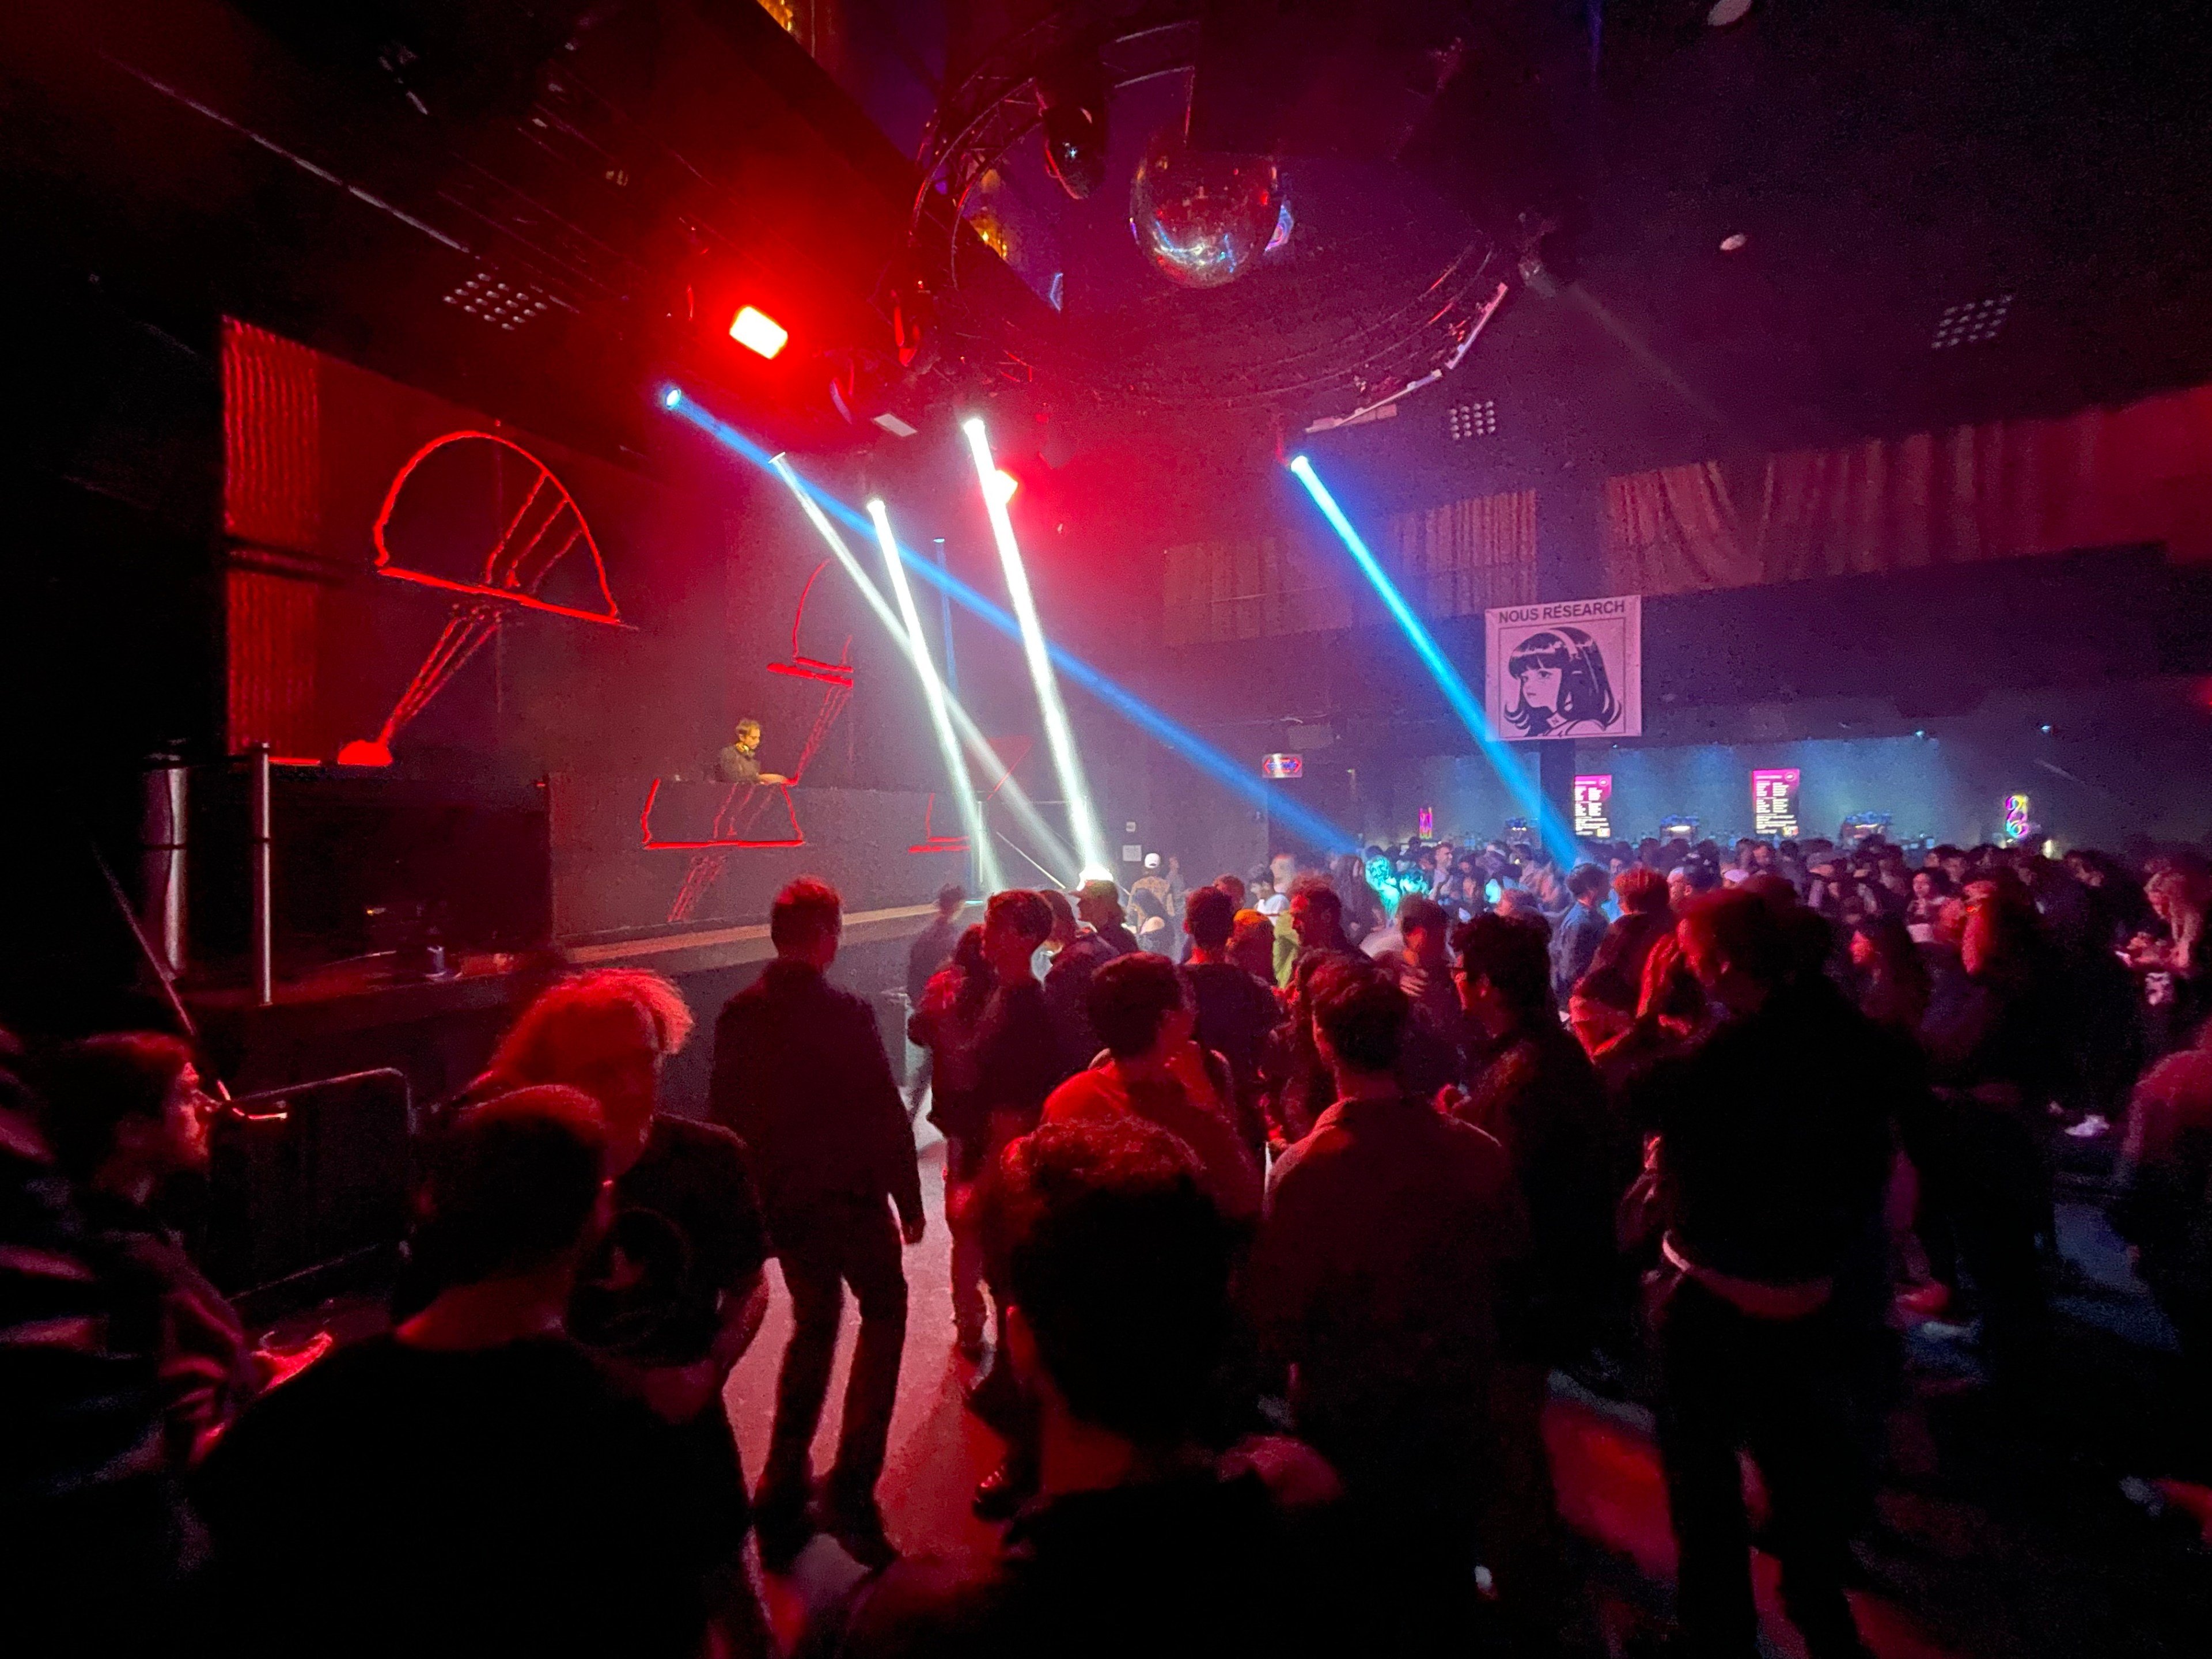 People party inside a dark nightclub.